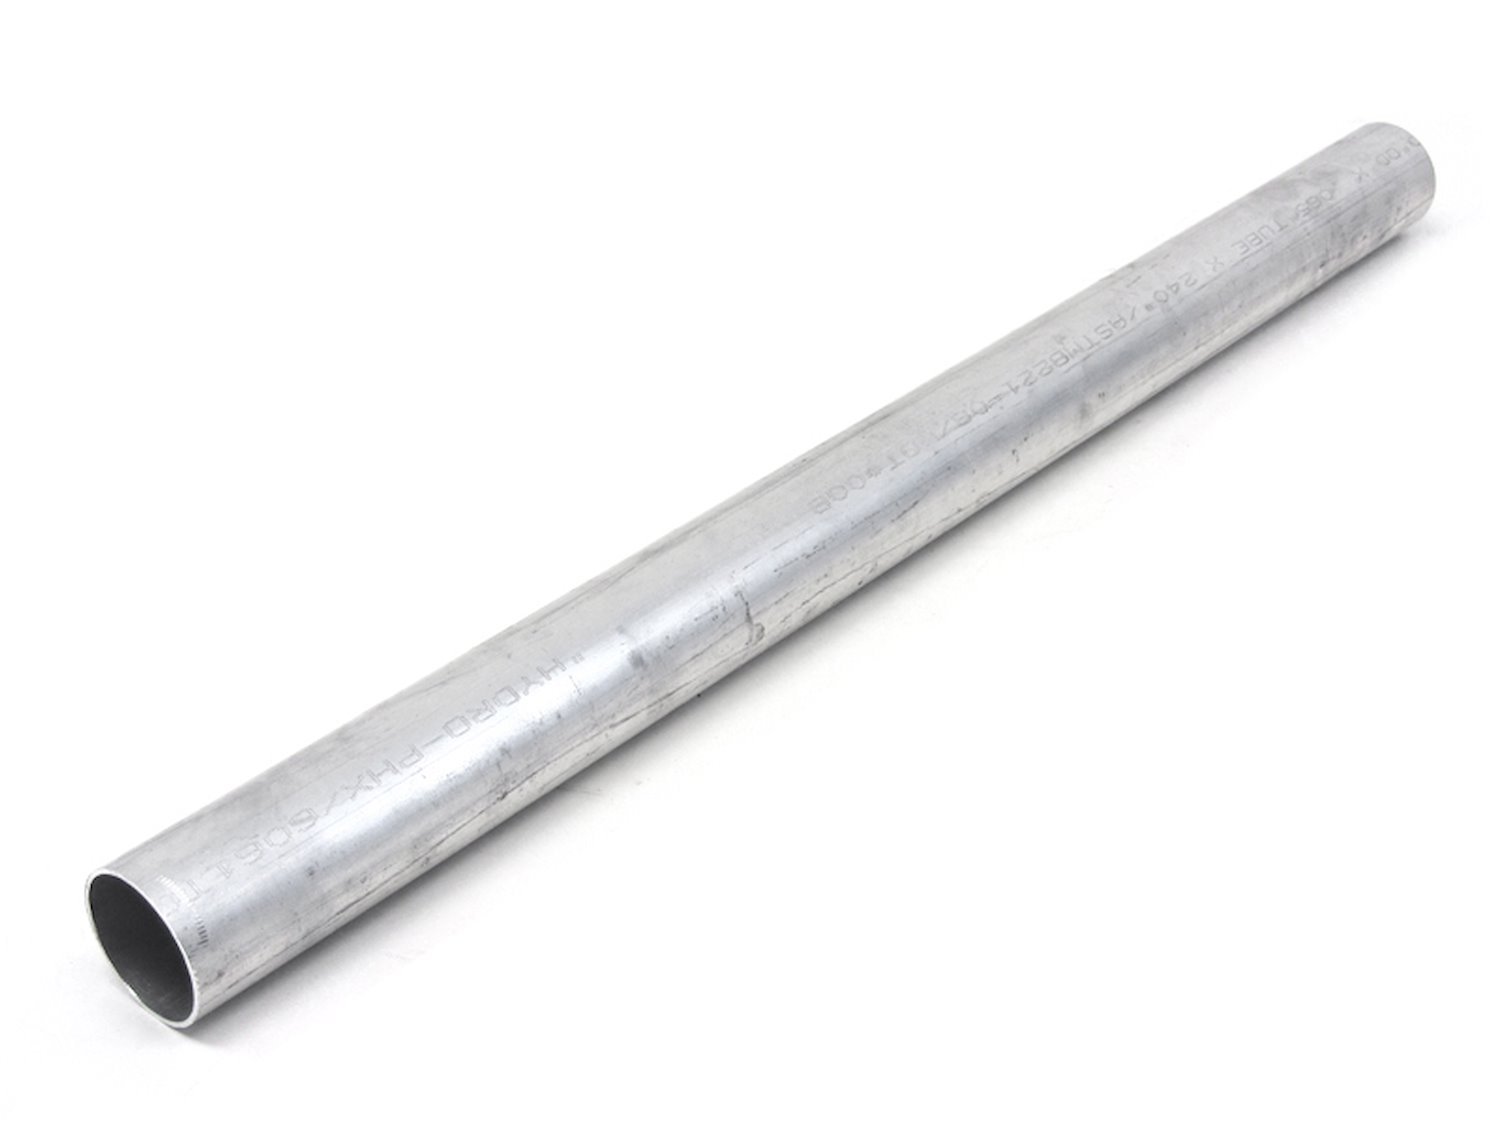 AST-325 Aluminum Tubing, 6061 Aluminum, Straight Tubing, 3-1/4 in. OD, Seamless, Raw Finish, 1 ft. Long